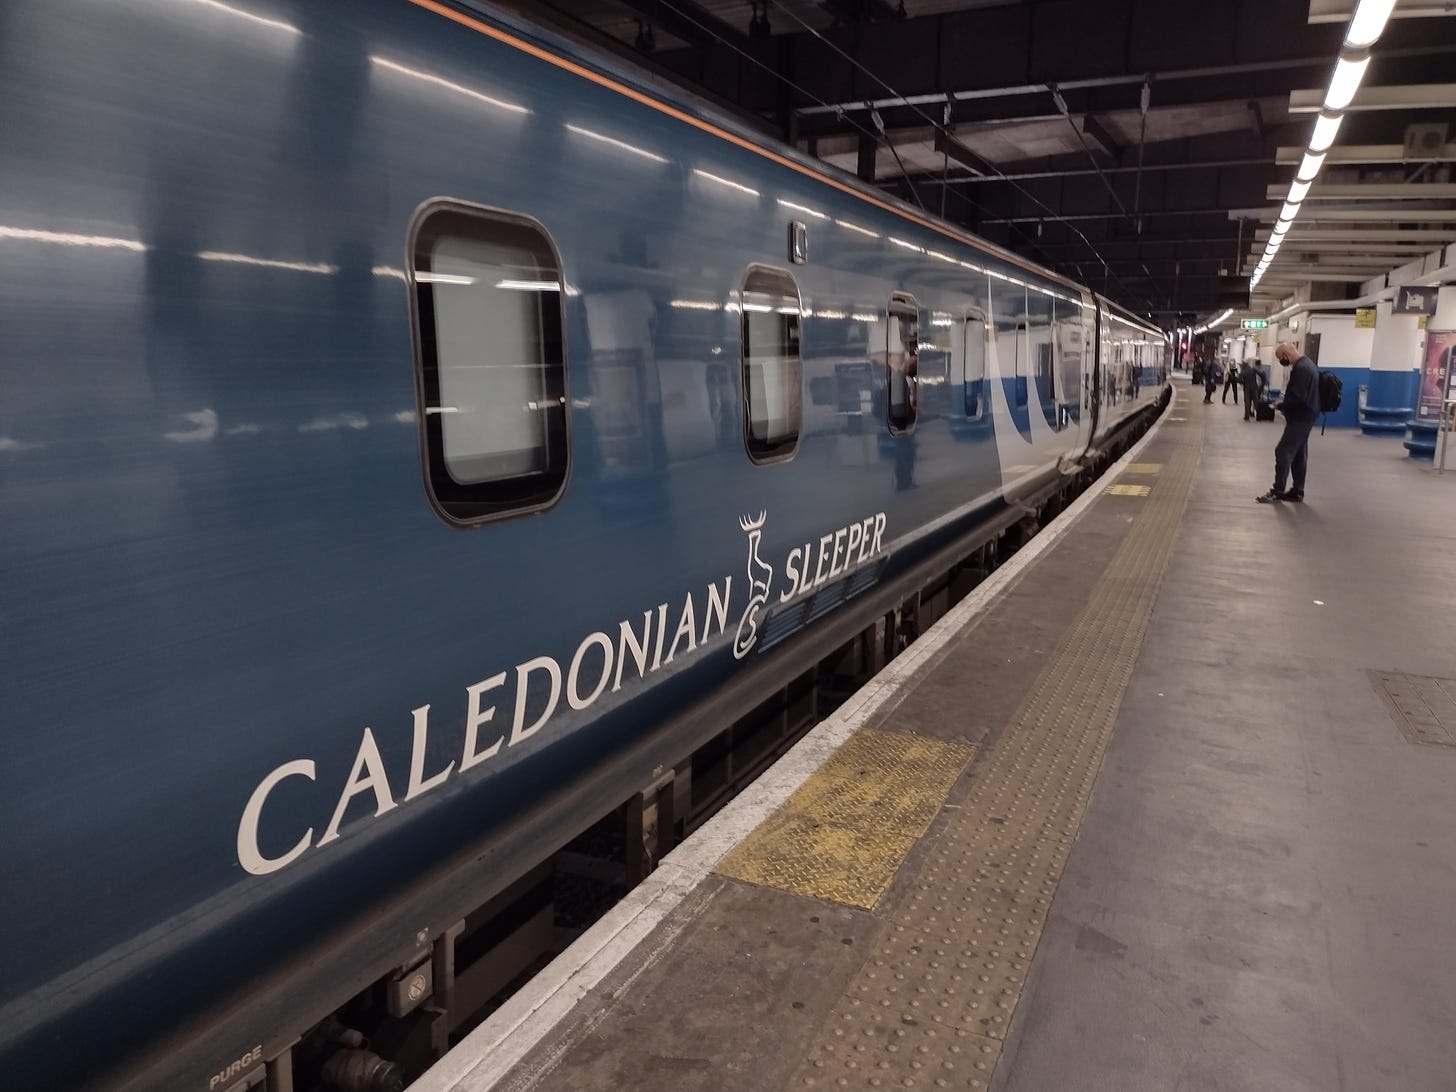 The Caledonian Sleeper train at London Euston